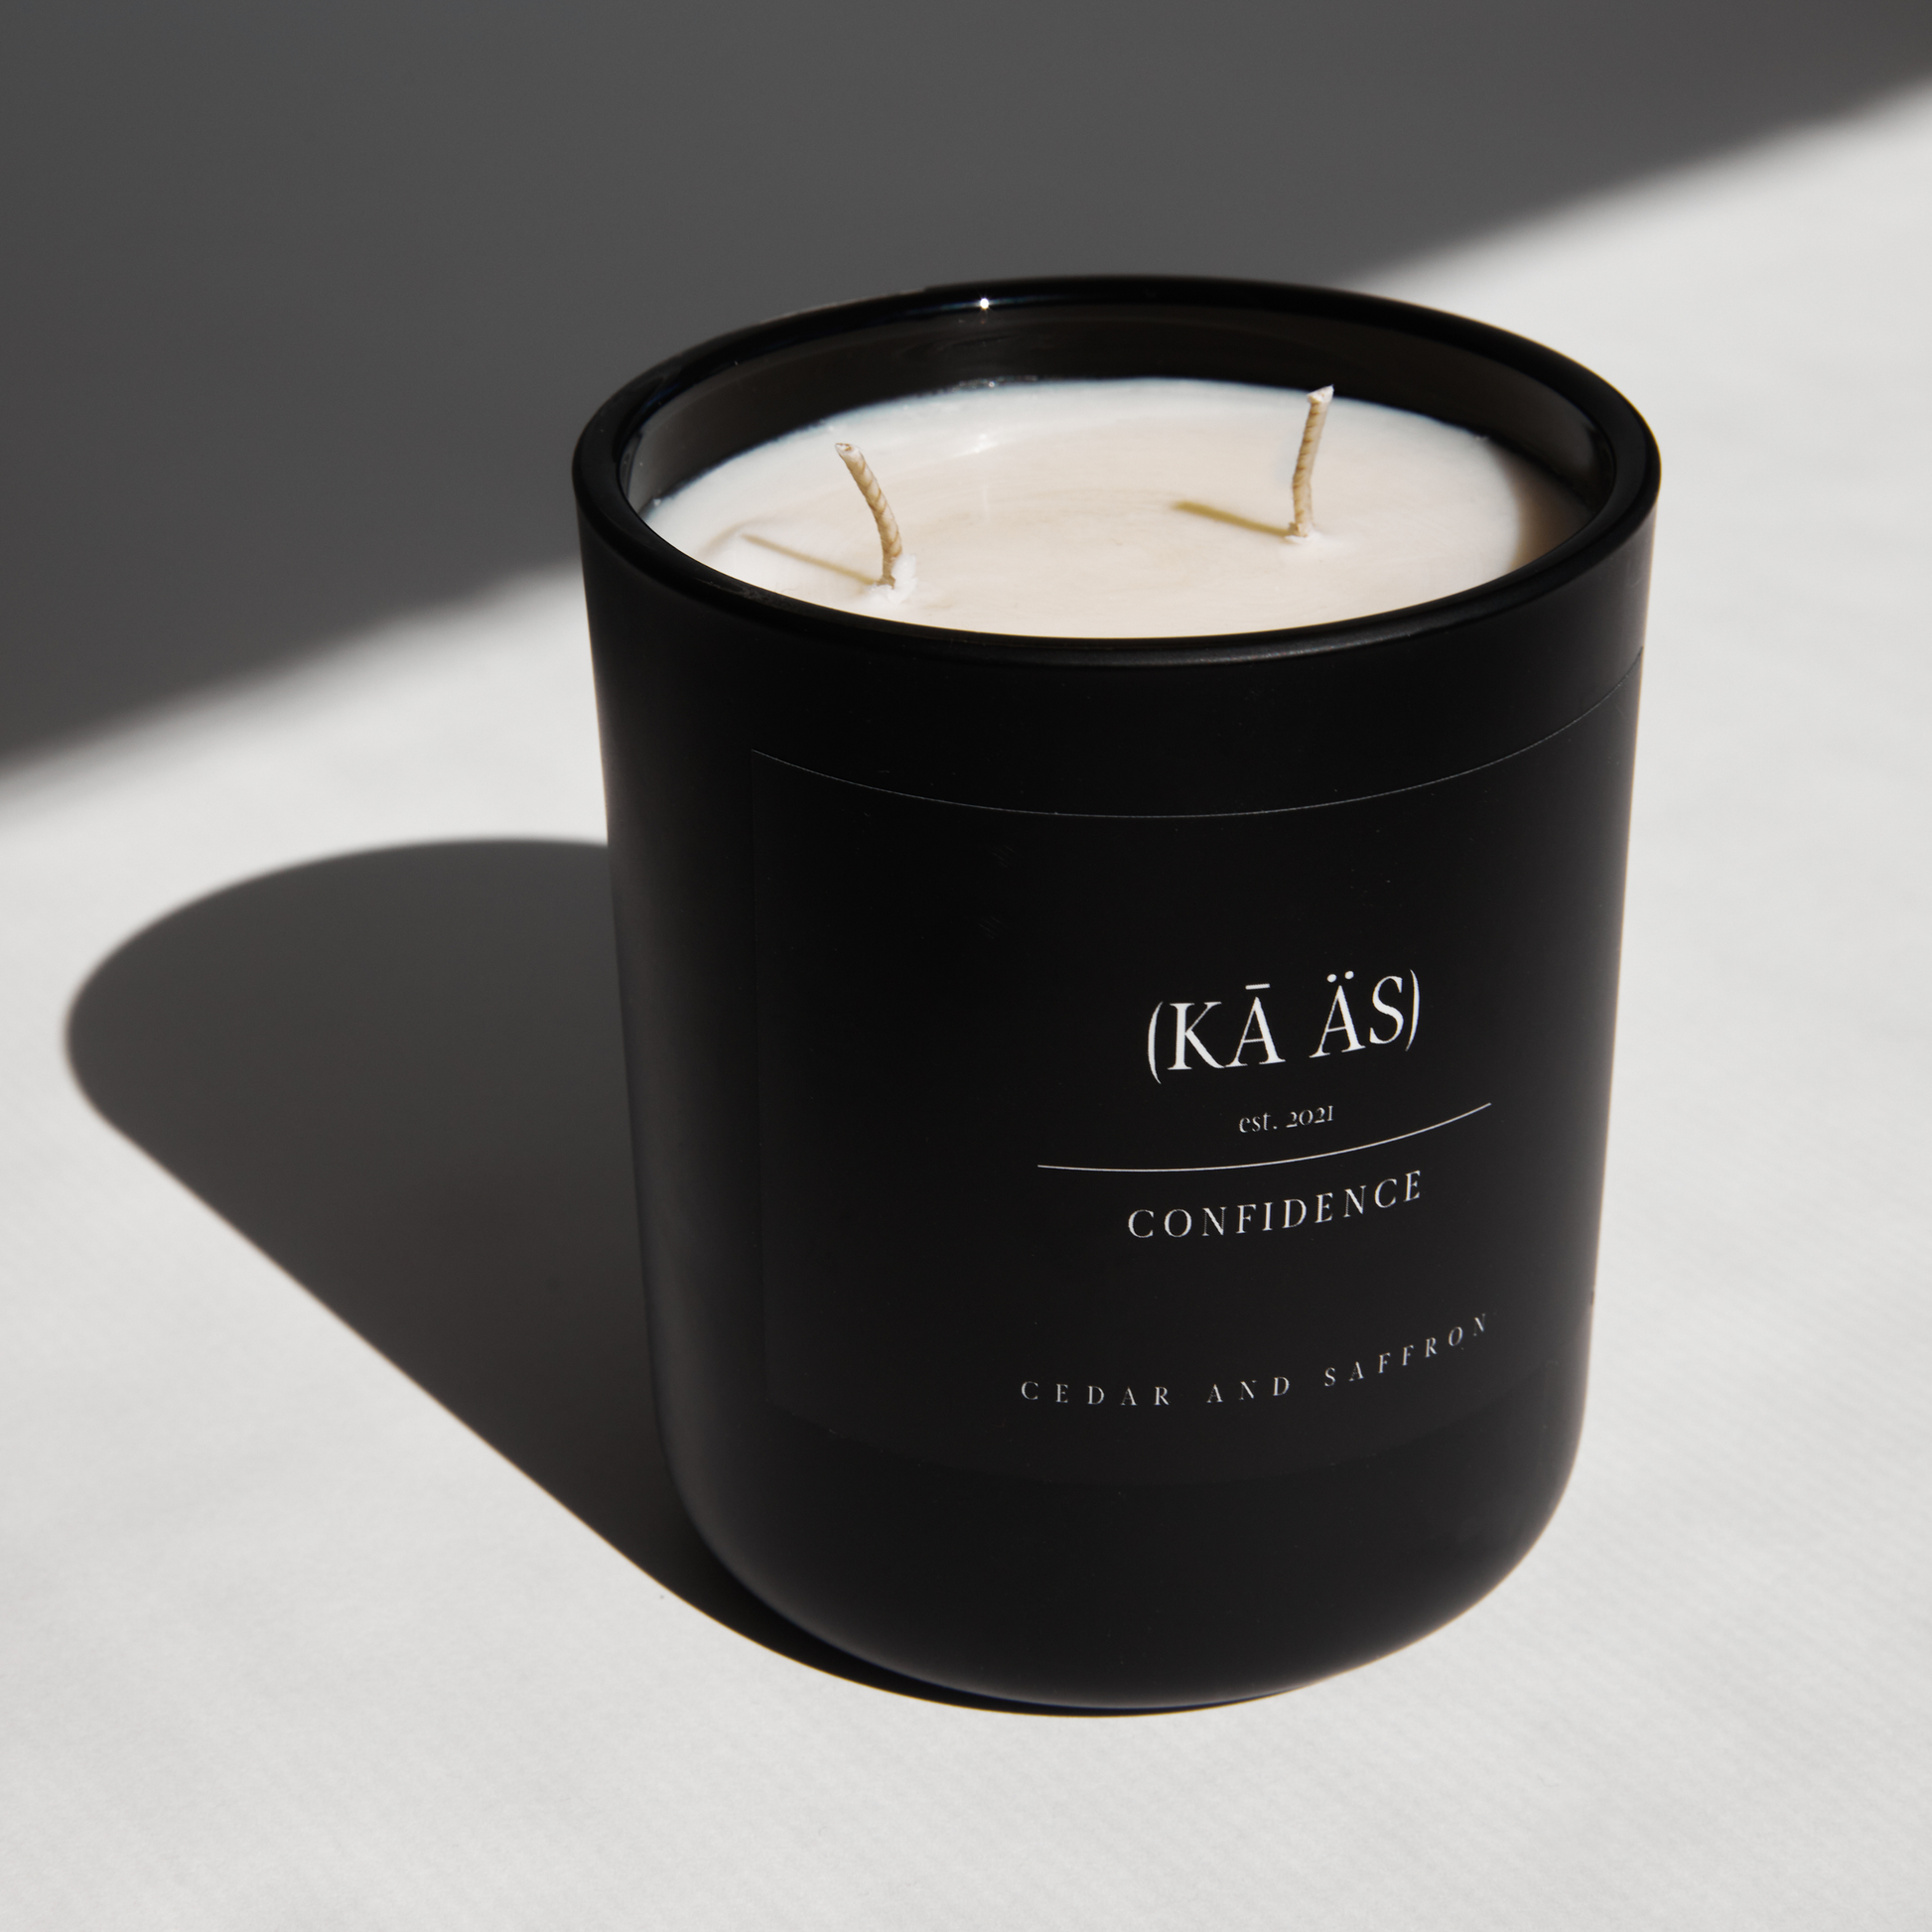 Cedar and saffron in a matte black vessel. confidence scented candle